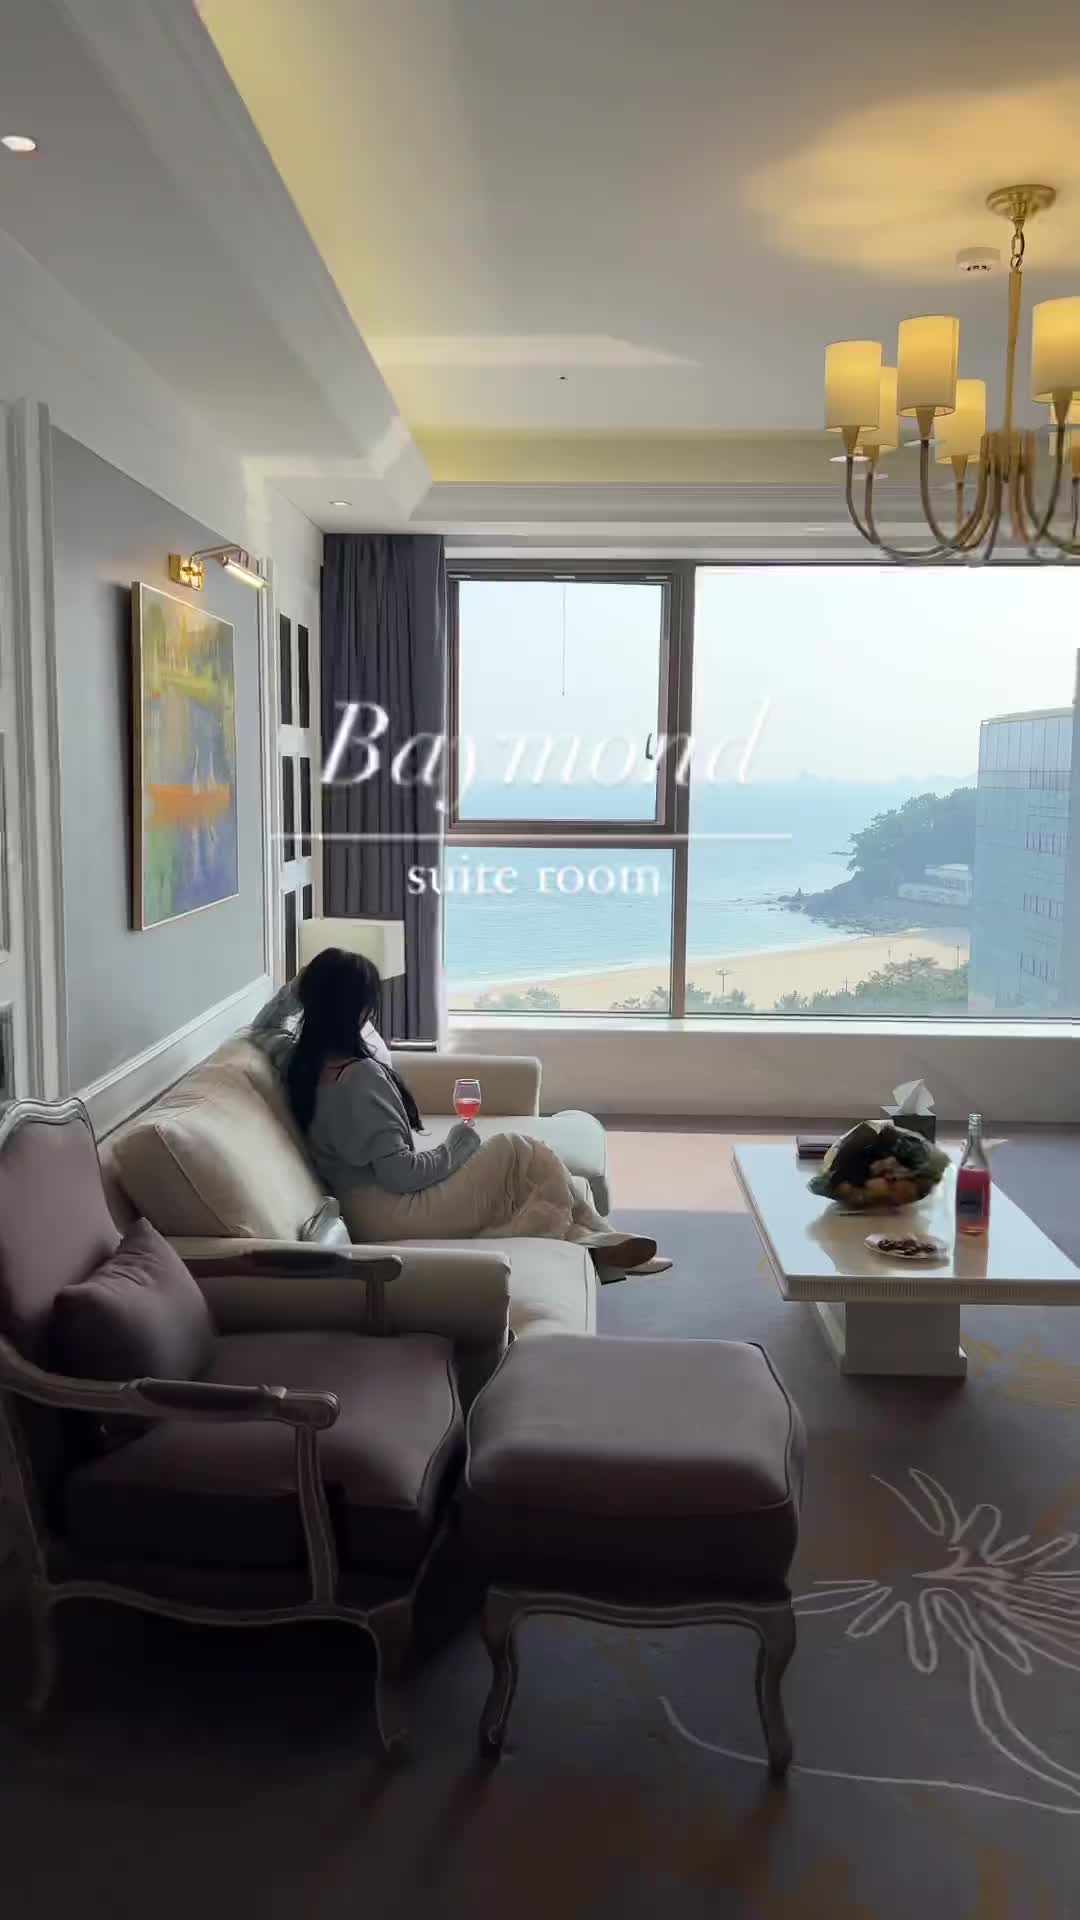 Perfect 2-Day Stay at Baymond Hotel, Busan 🏰🌊